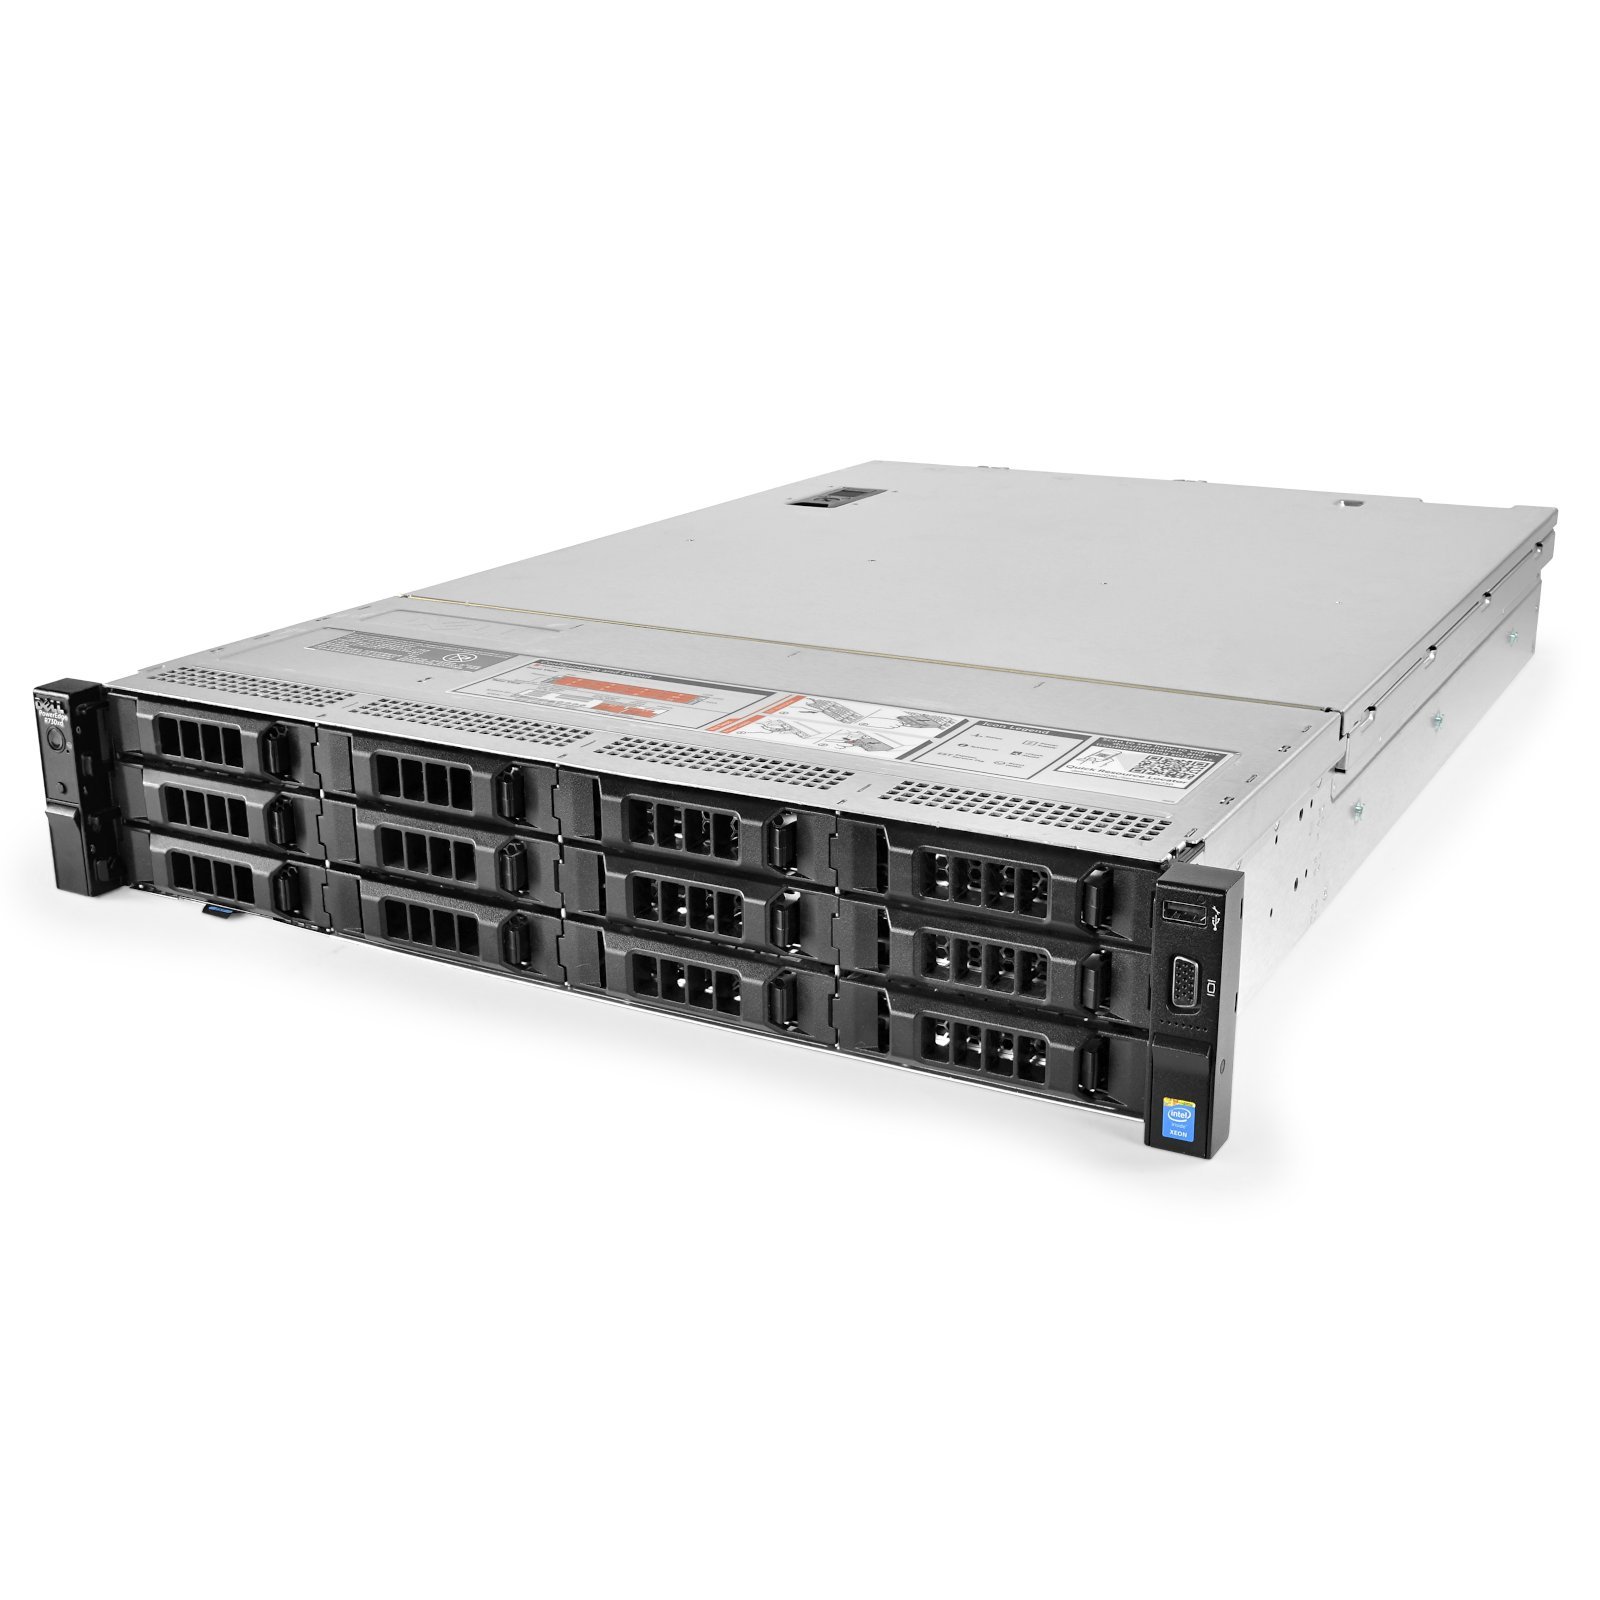 Подробное фото Сервер DELL PowerEdge R730XD Xeon 2x E5-2699Av4 256Gb 2133P DDR4 12x noHDD 3.5", SAS RAID Perc H330 , 2*PSU 750W